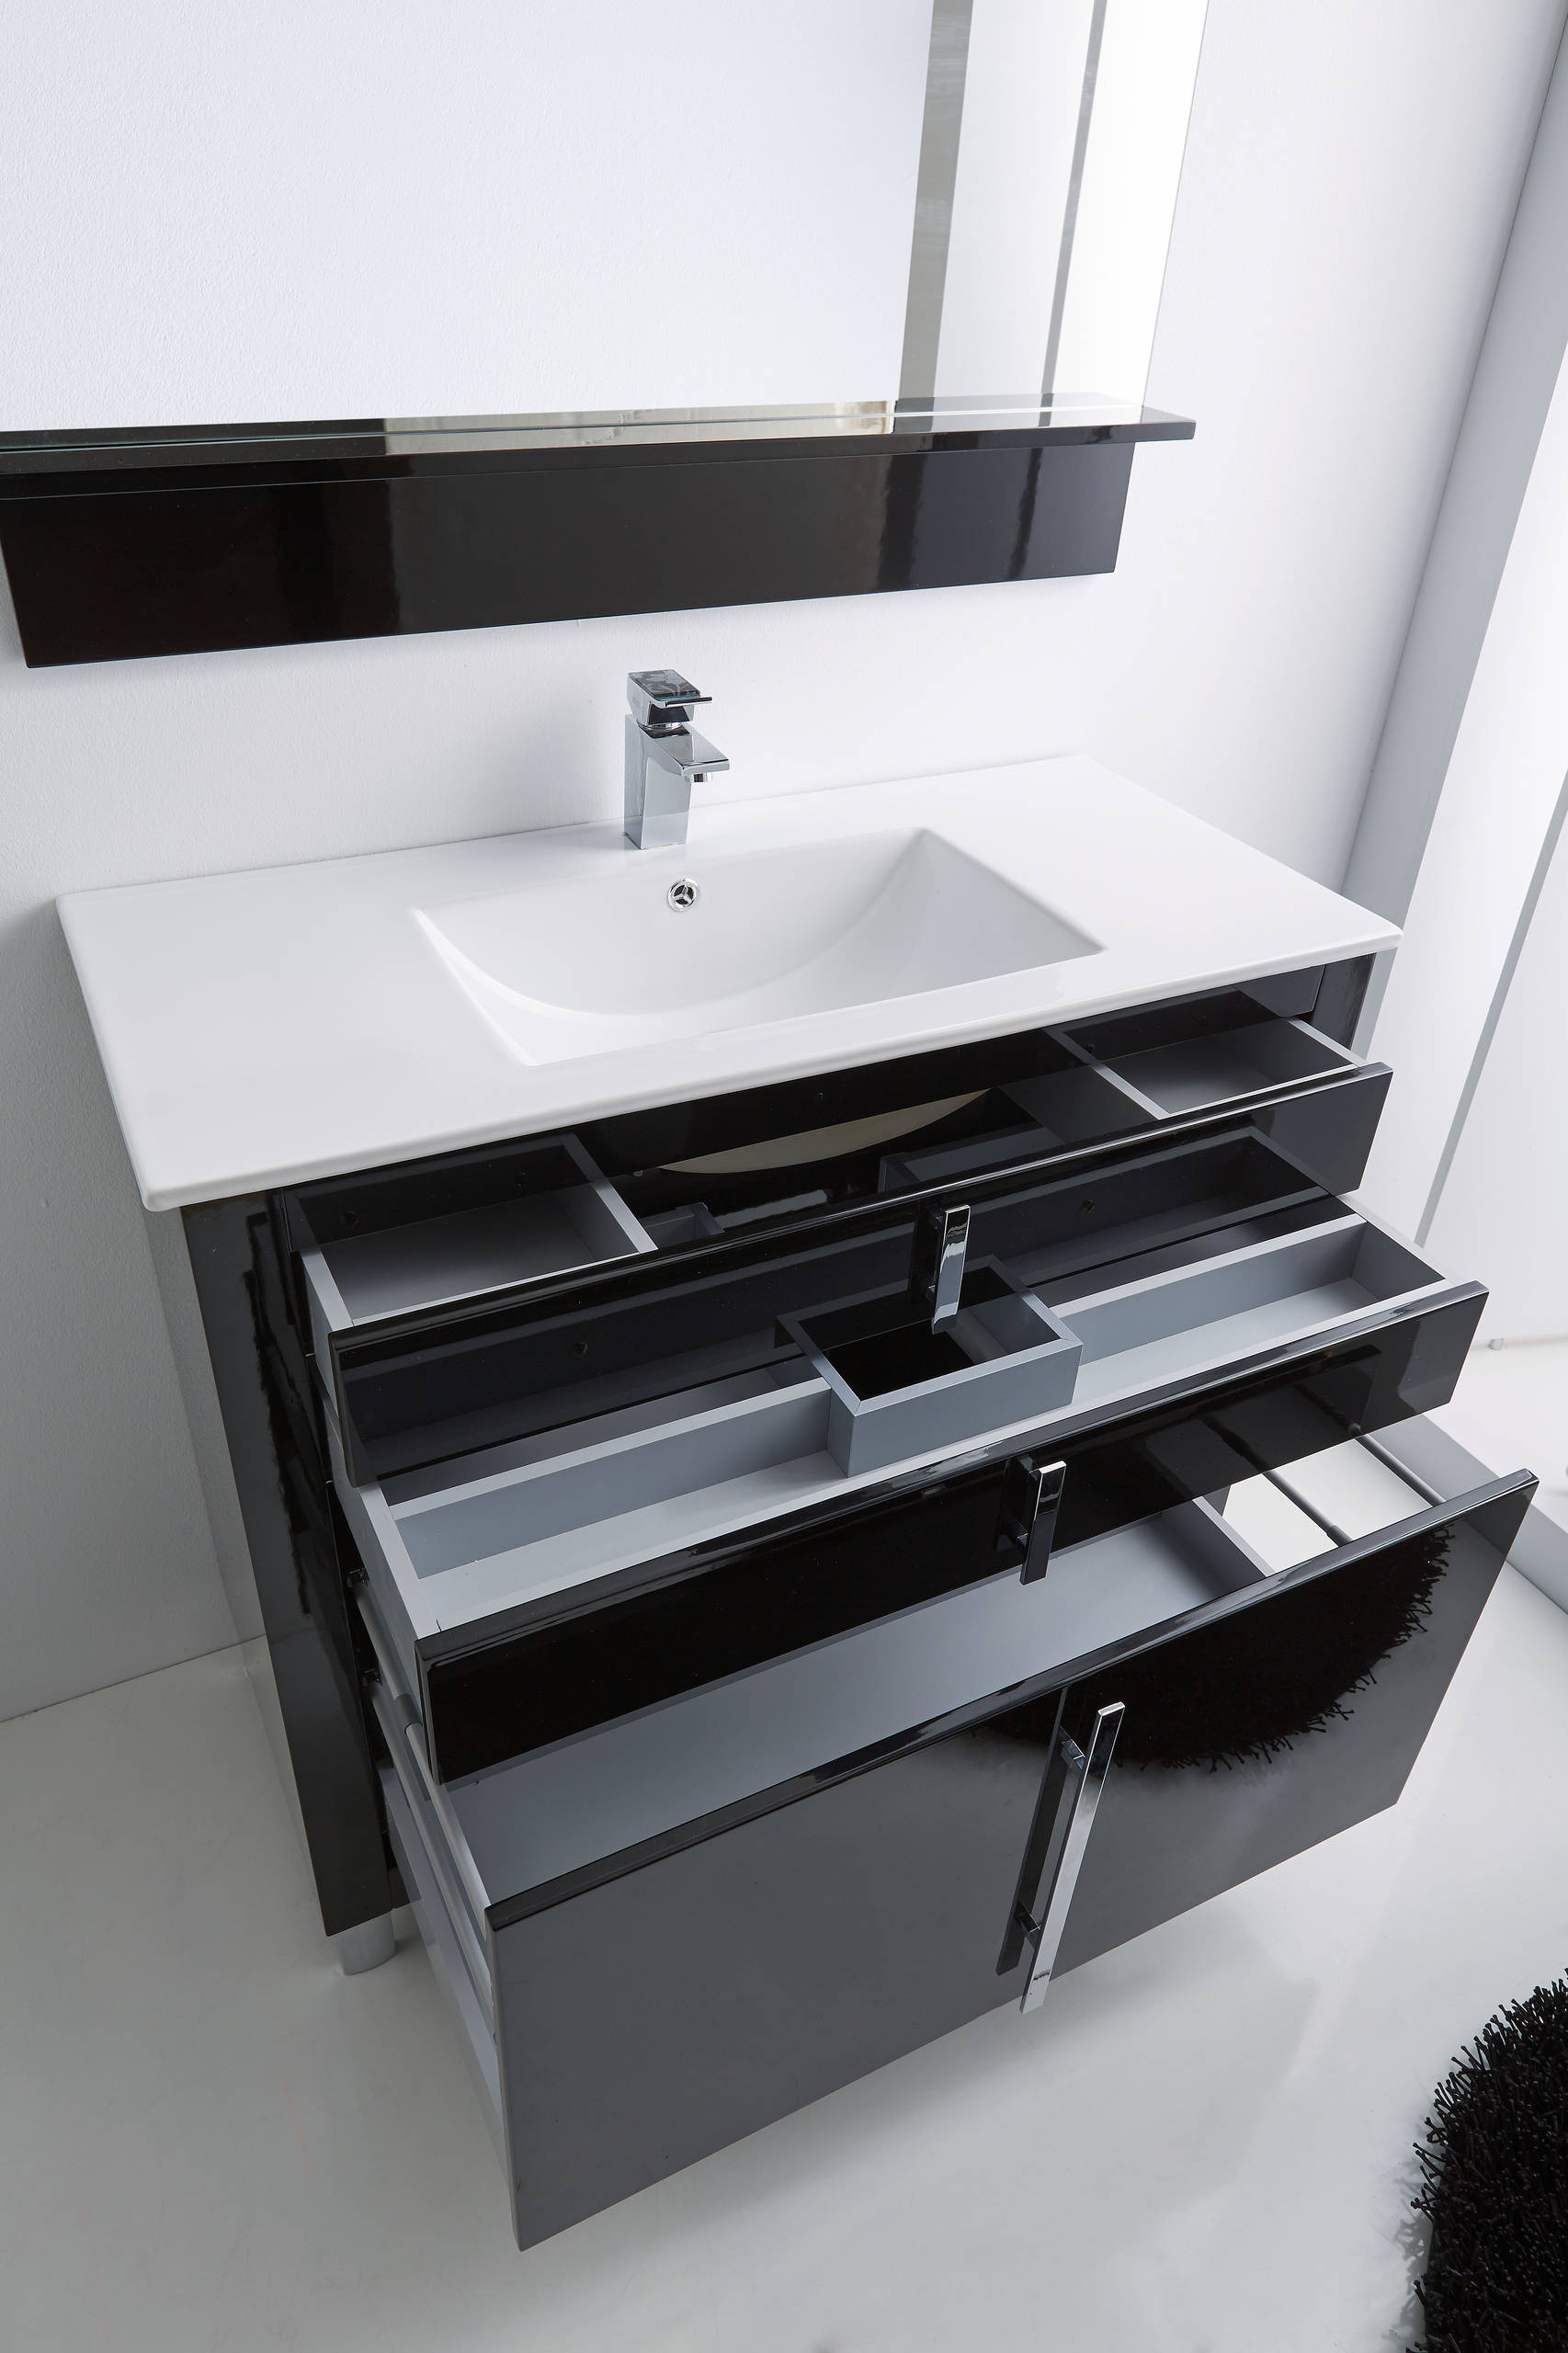 EEMKAY® New Norsk High Gloss Bathroom Storage Cabinet Mirror Modern & Functional Design 